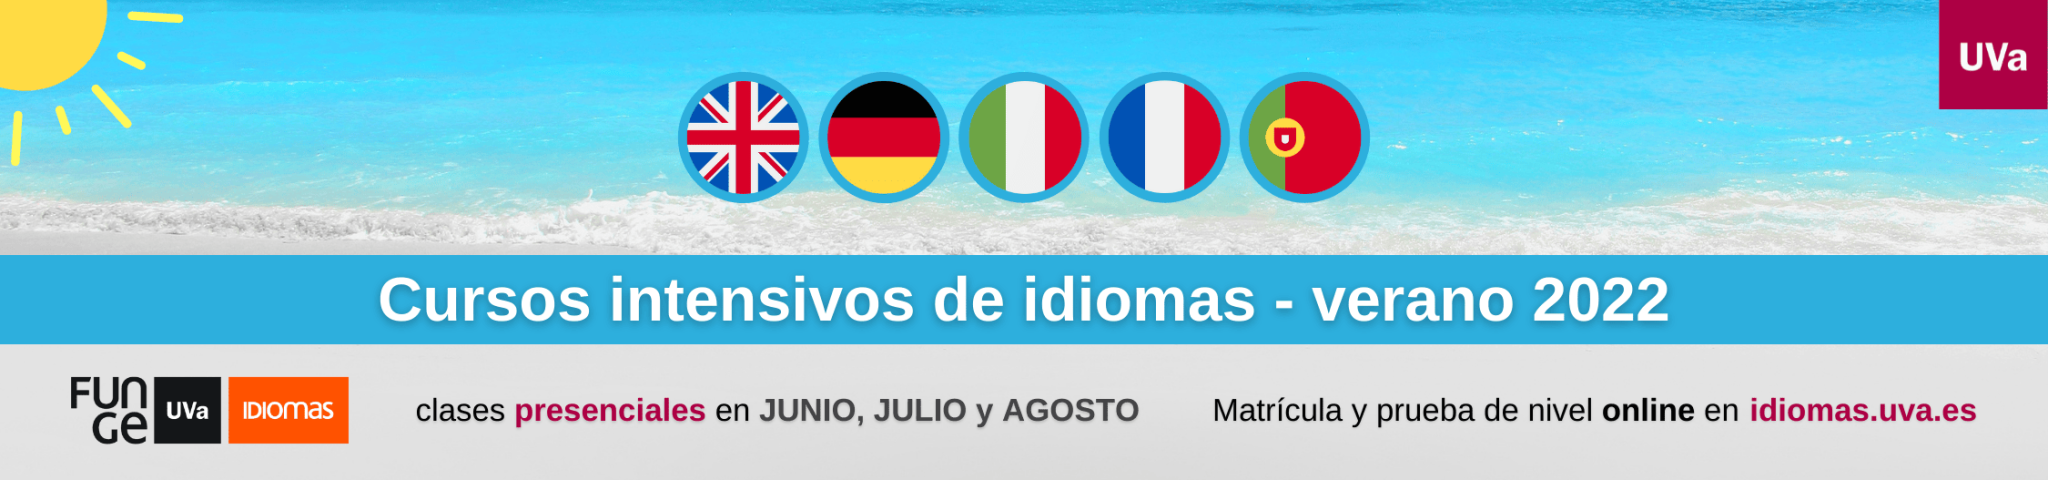 Banner cursos de verano ingles frances aleman italiano Centro de Idiomas UVa 2022 2048x480 1